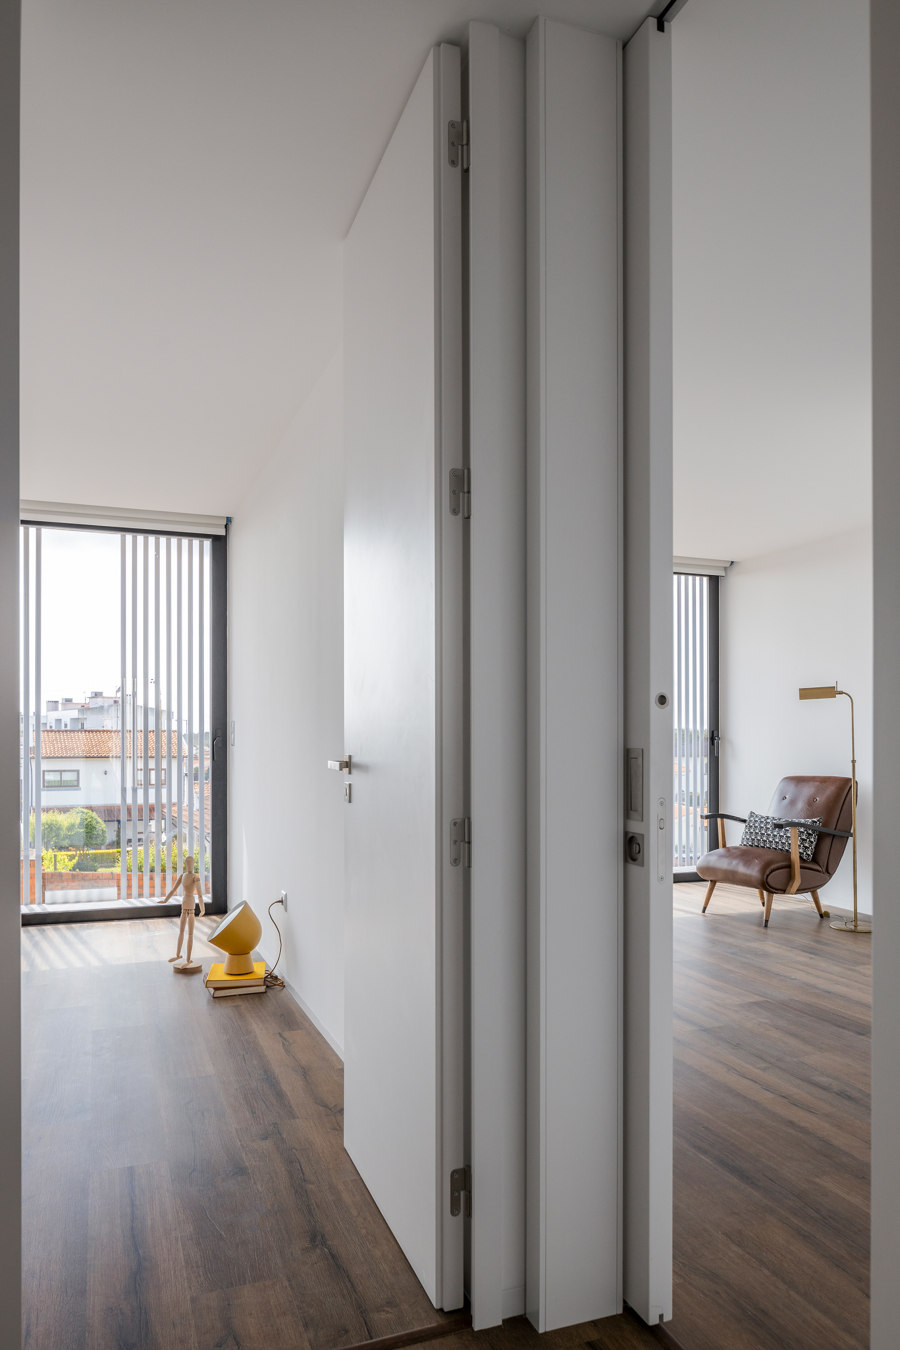 Bloco Habitacional I by Carolina Freitas Arquitectura | Apartment blocks